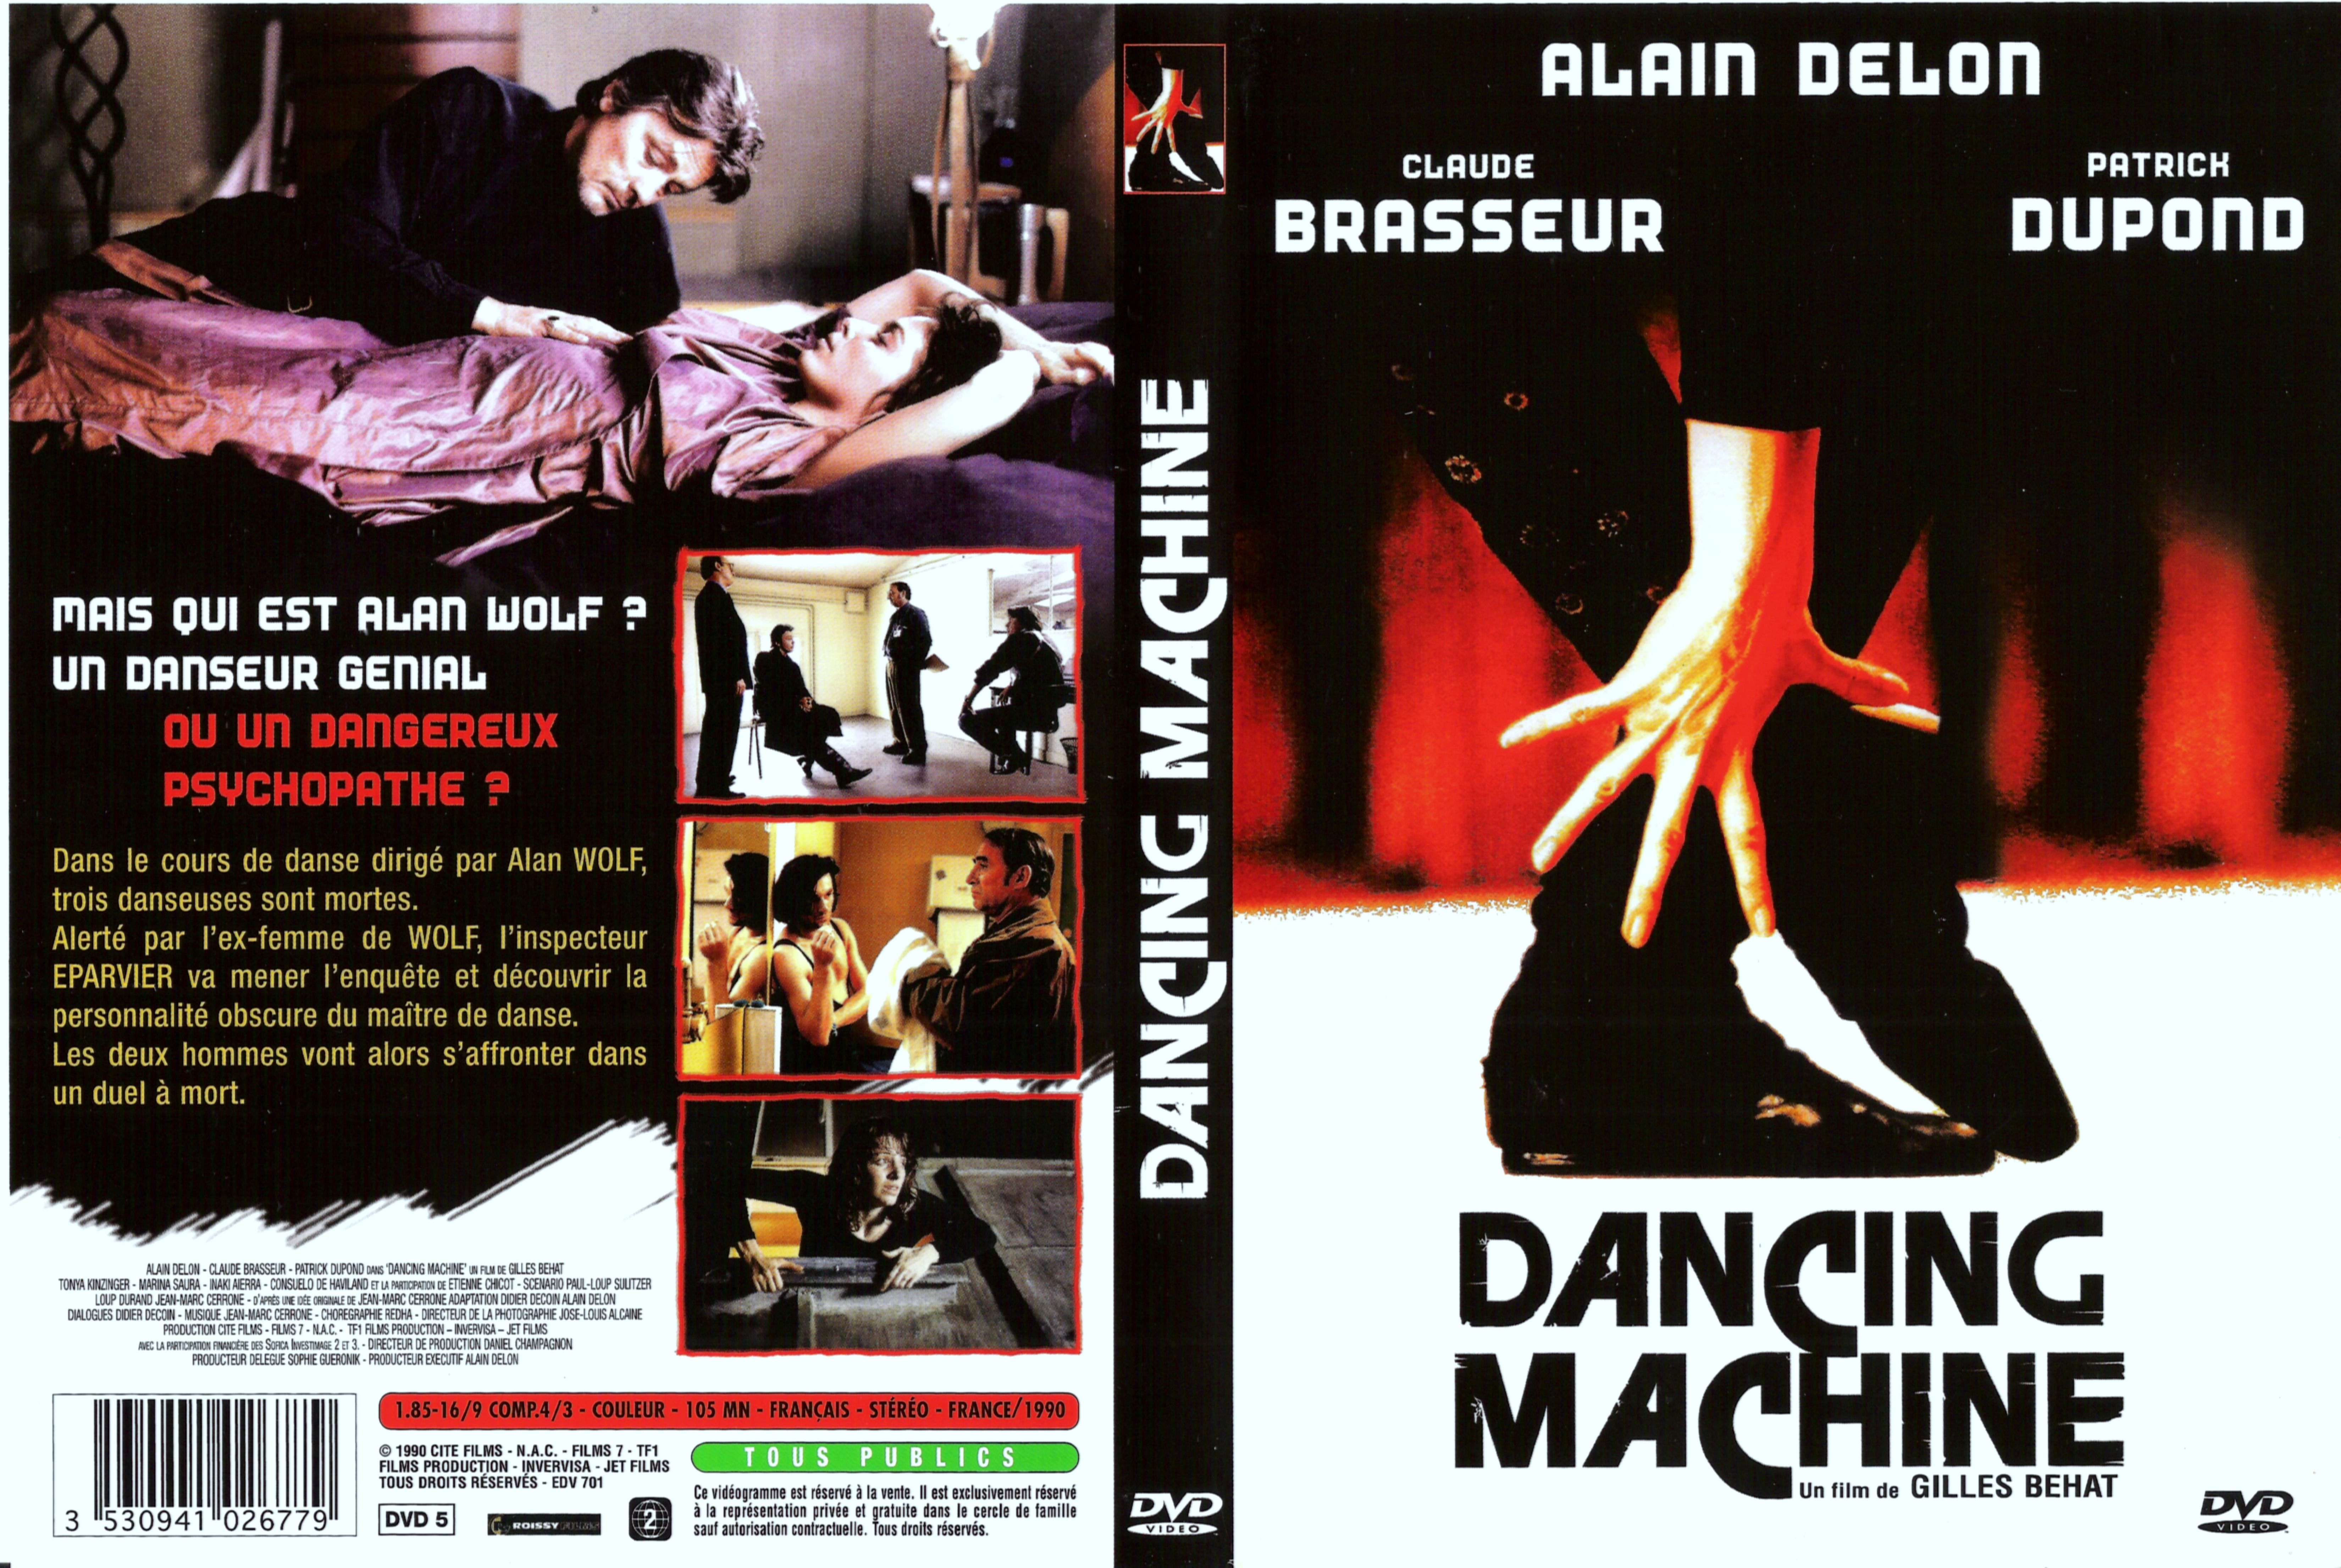 Jaquette DVD Dancing machine v2